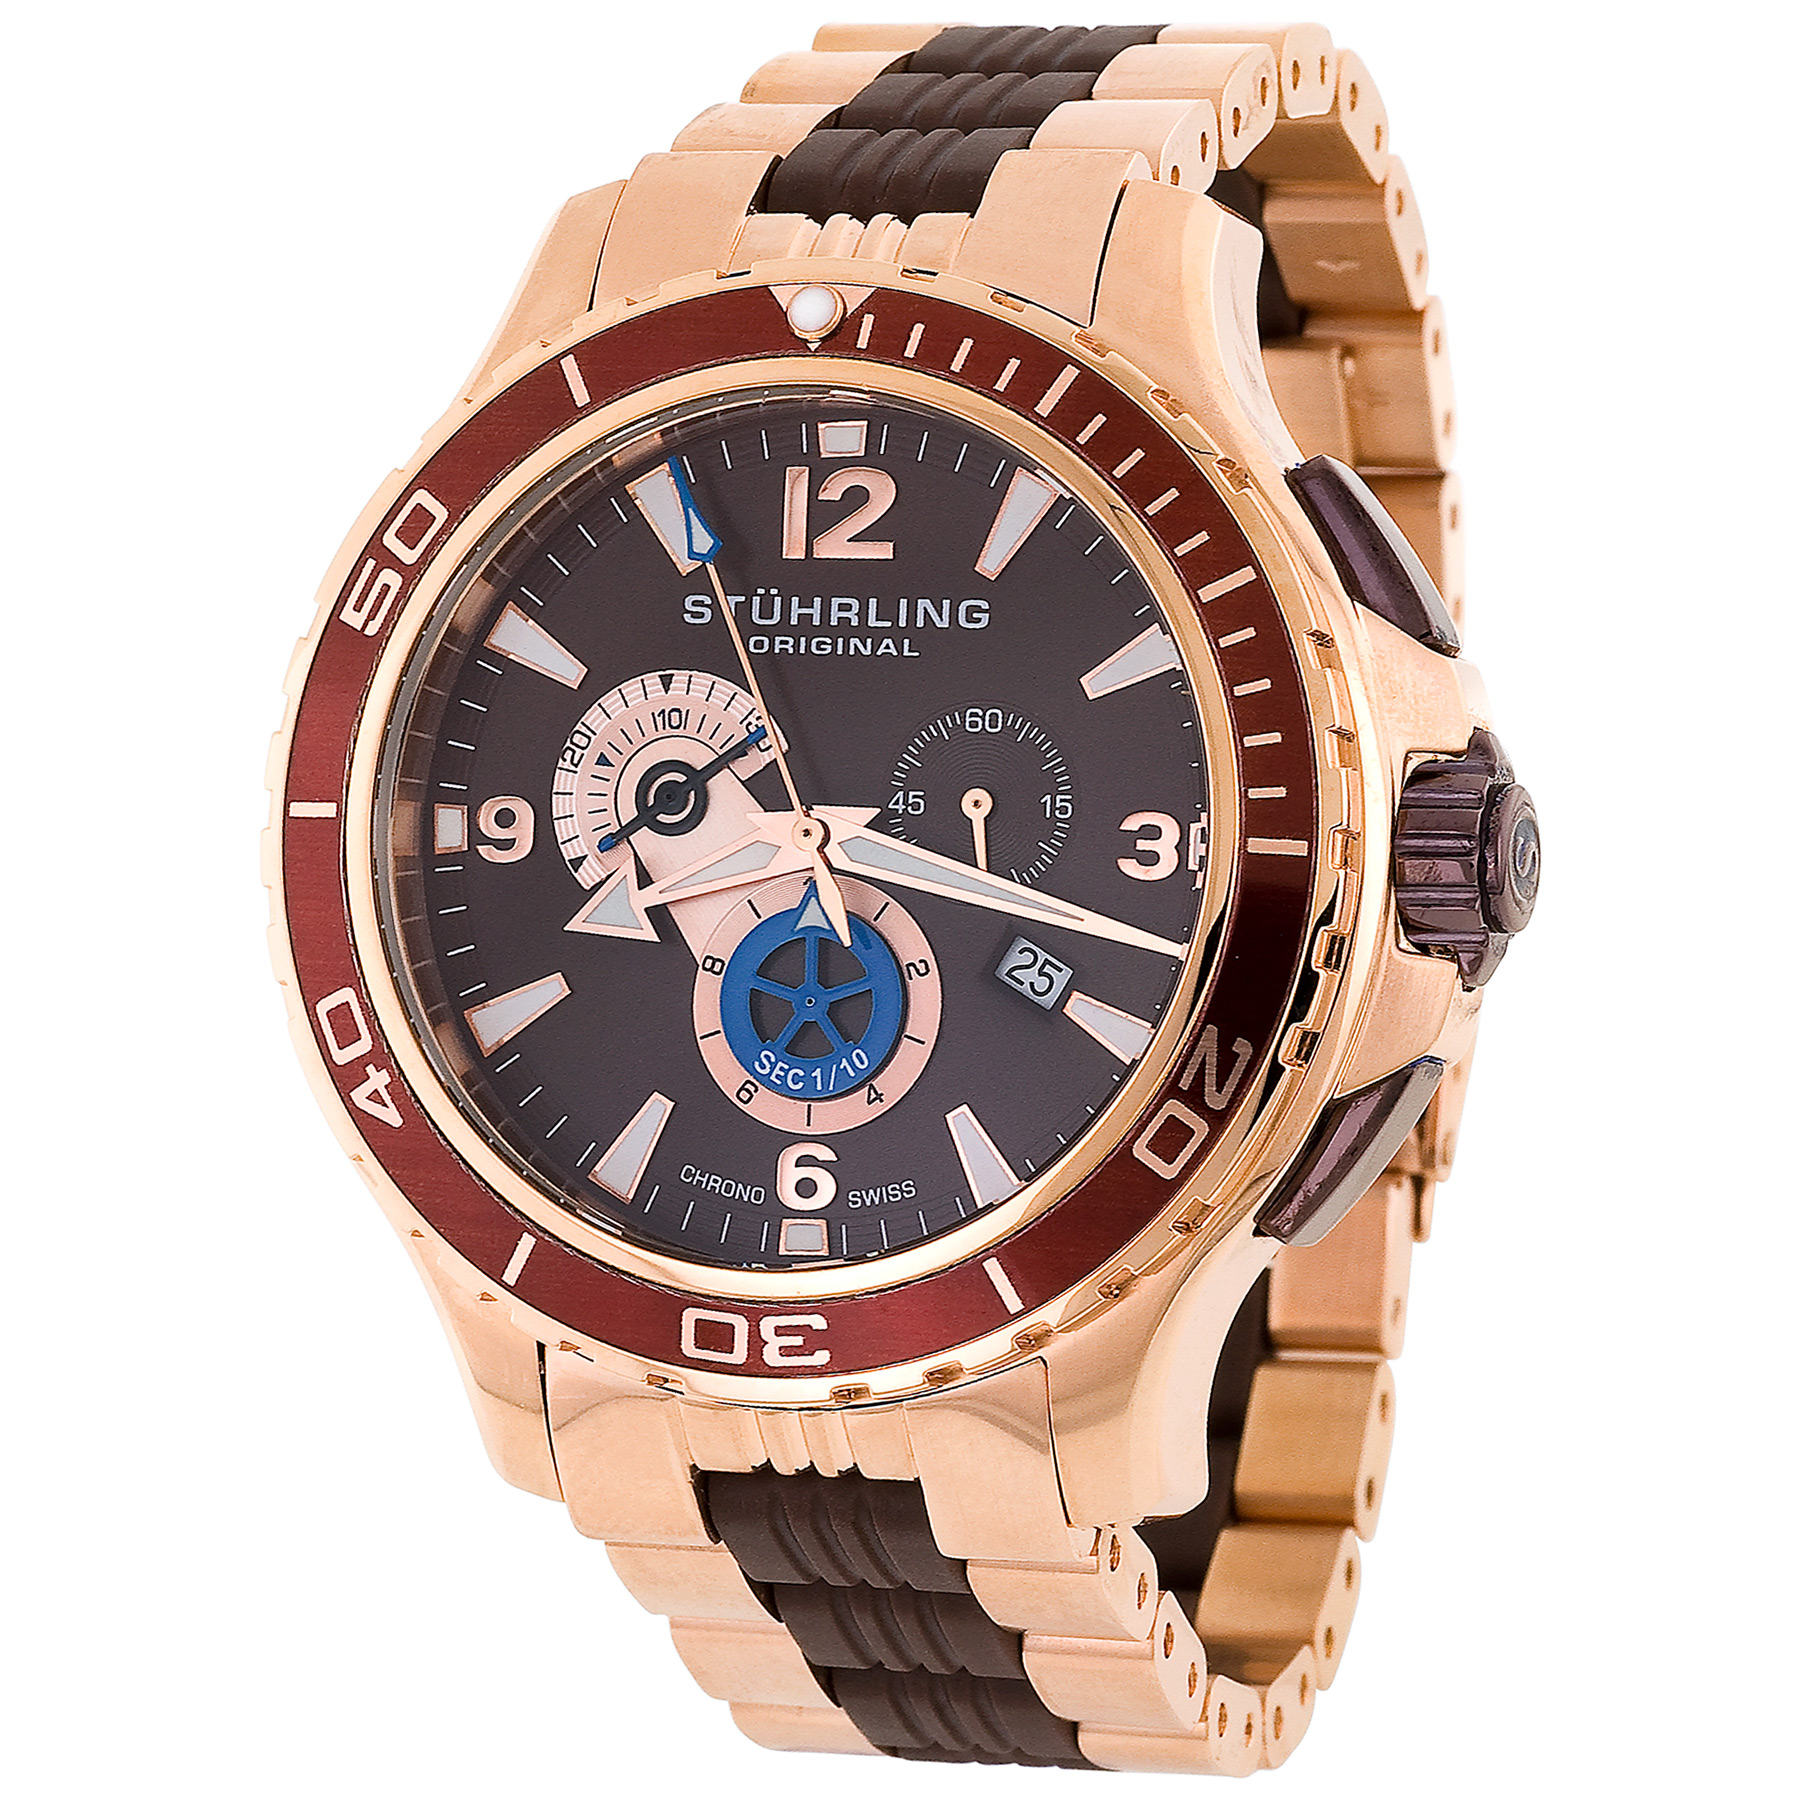 Stuhrling Aquadiver Men's Watch Model 270.332K759